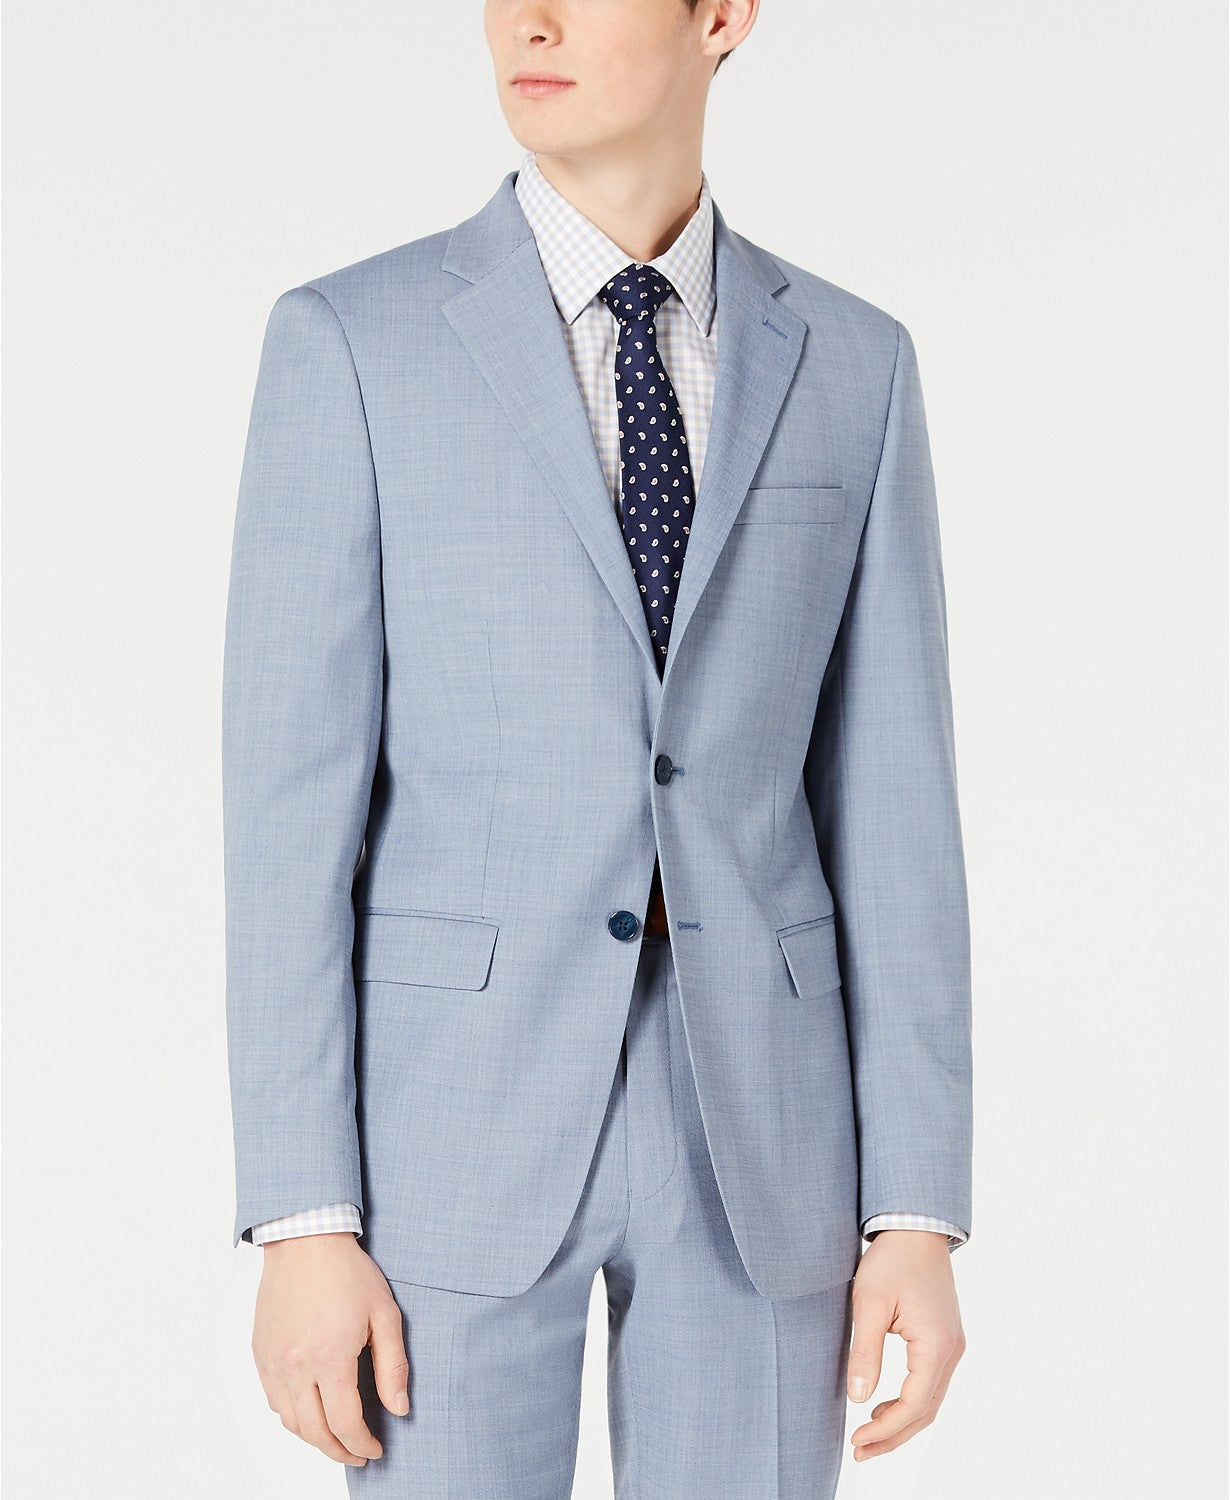 Calvin Klein Men's 46L Suit Jacket X-Fit Slim-Fit Light Blue Sharkskin Wool